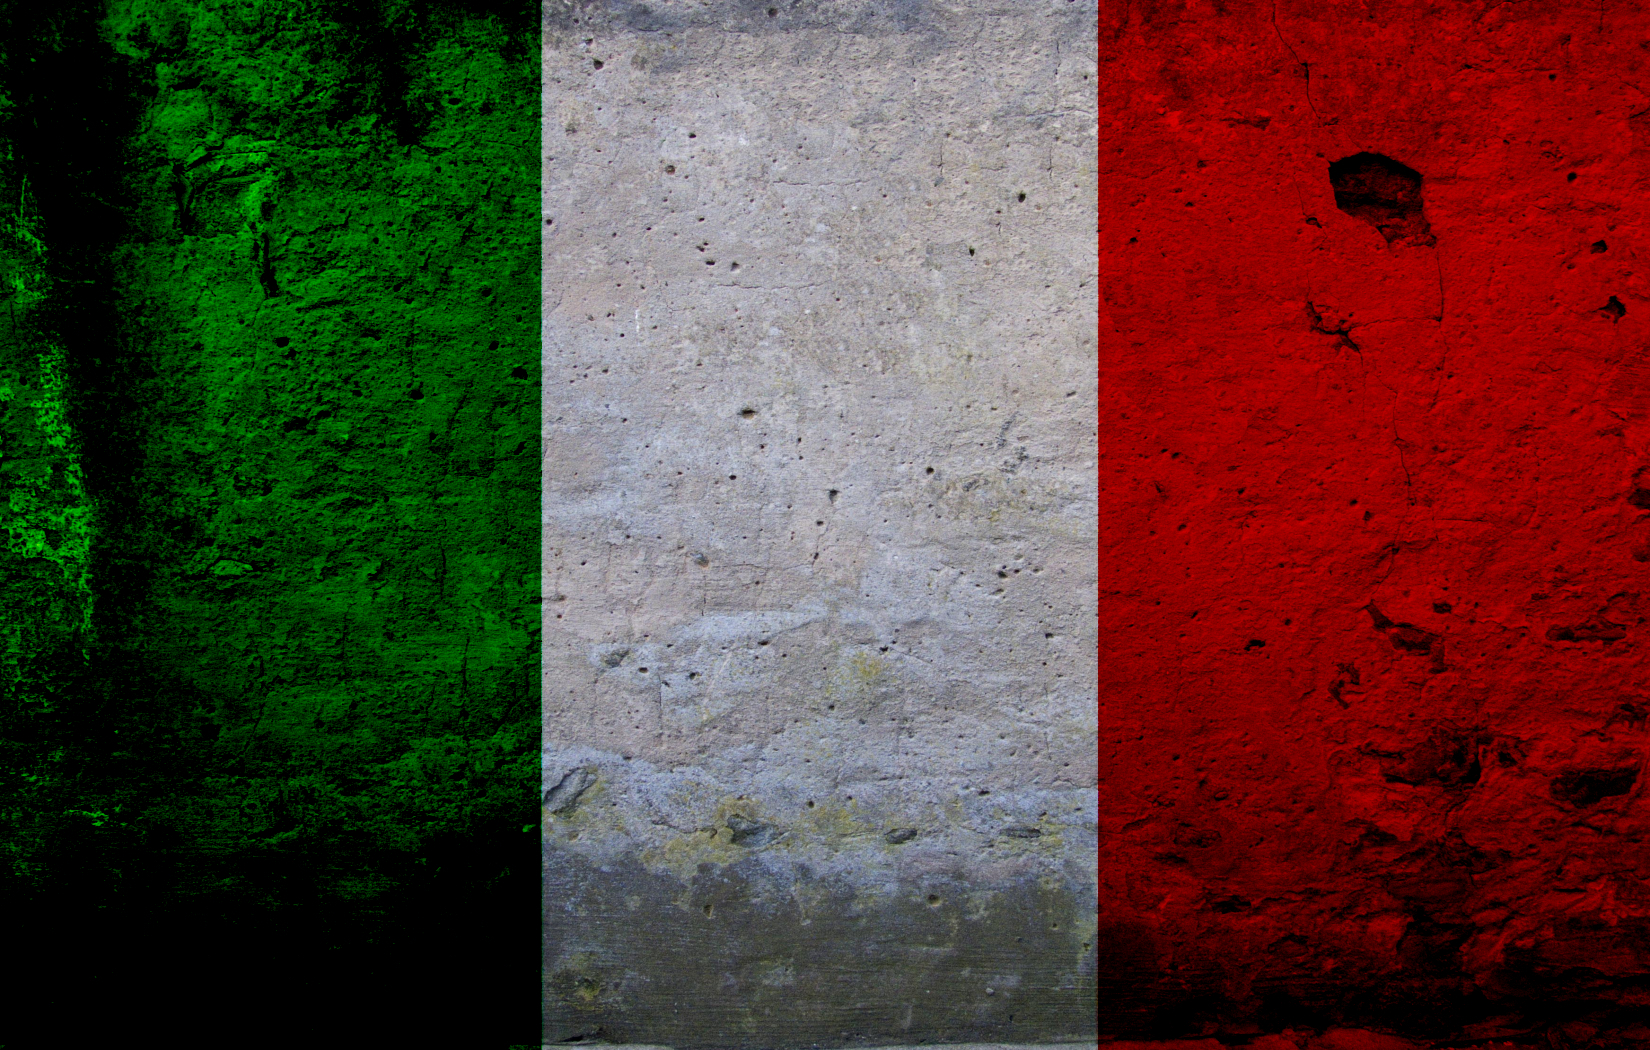 Italian Flag Wallpapers Free